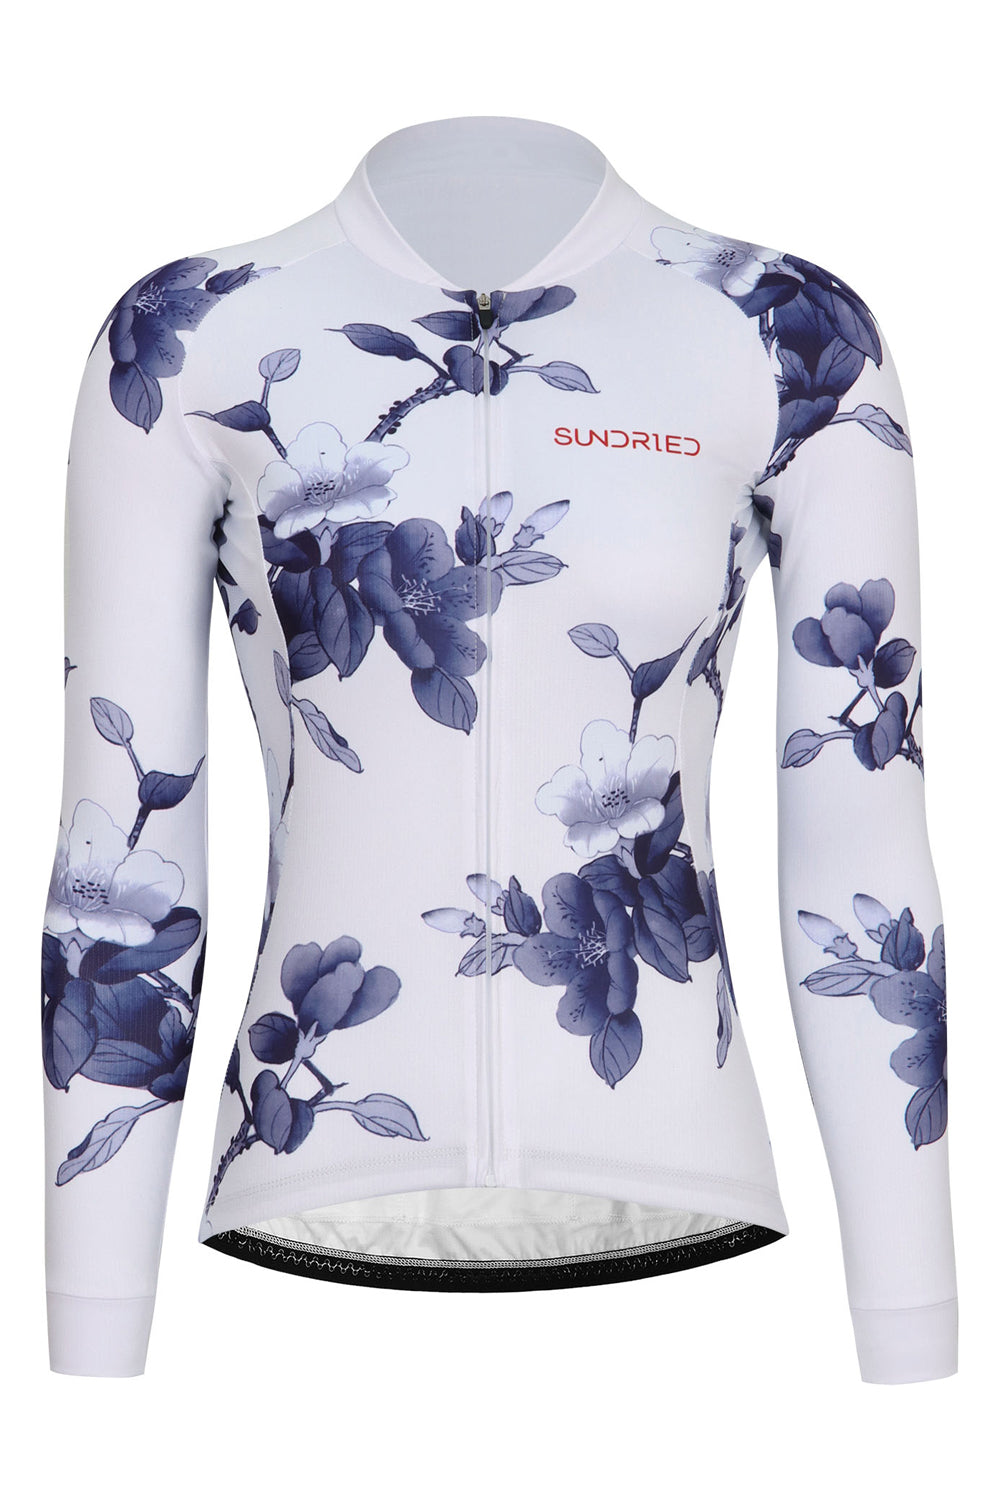 Sundried Floral Women's Long Sleeve Training Jersey Long Sleeve Jersey S White SD0460 S White Activewear